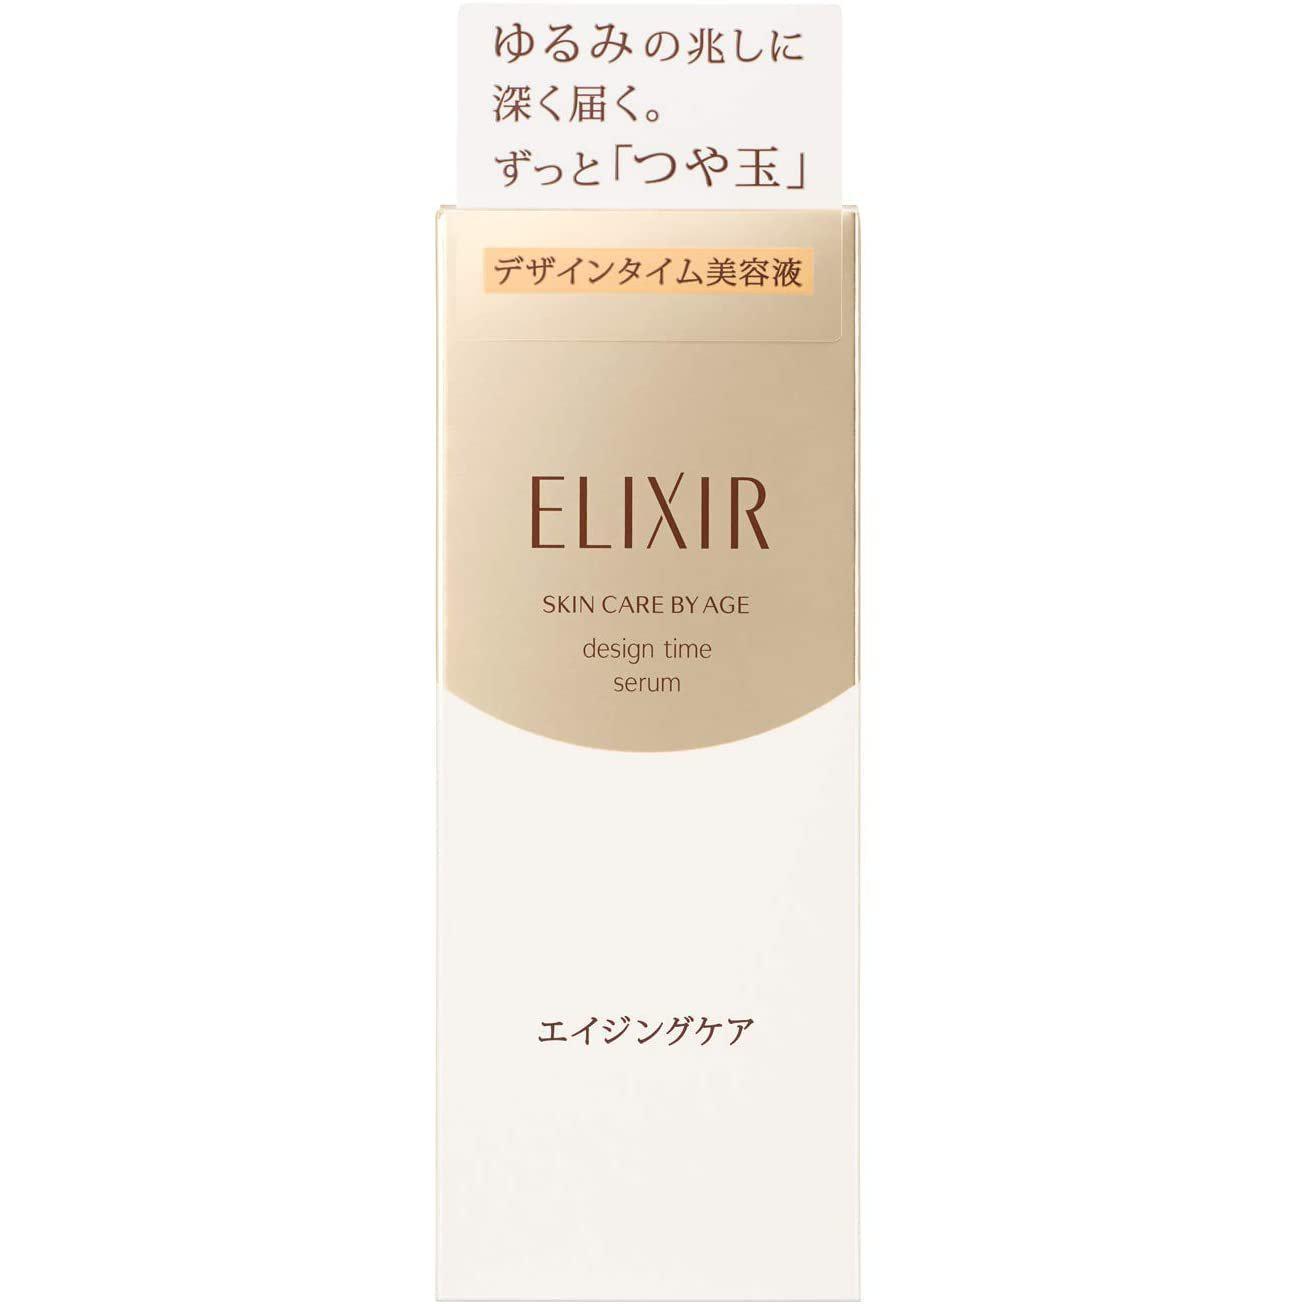 Shiseido Elixir Superieur Design Time Serum 40ml